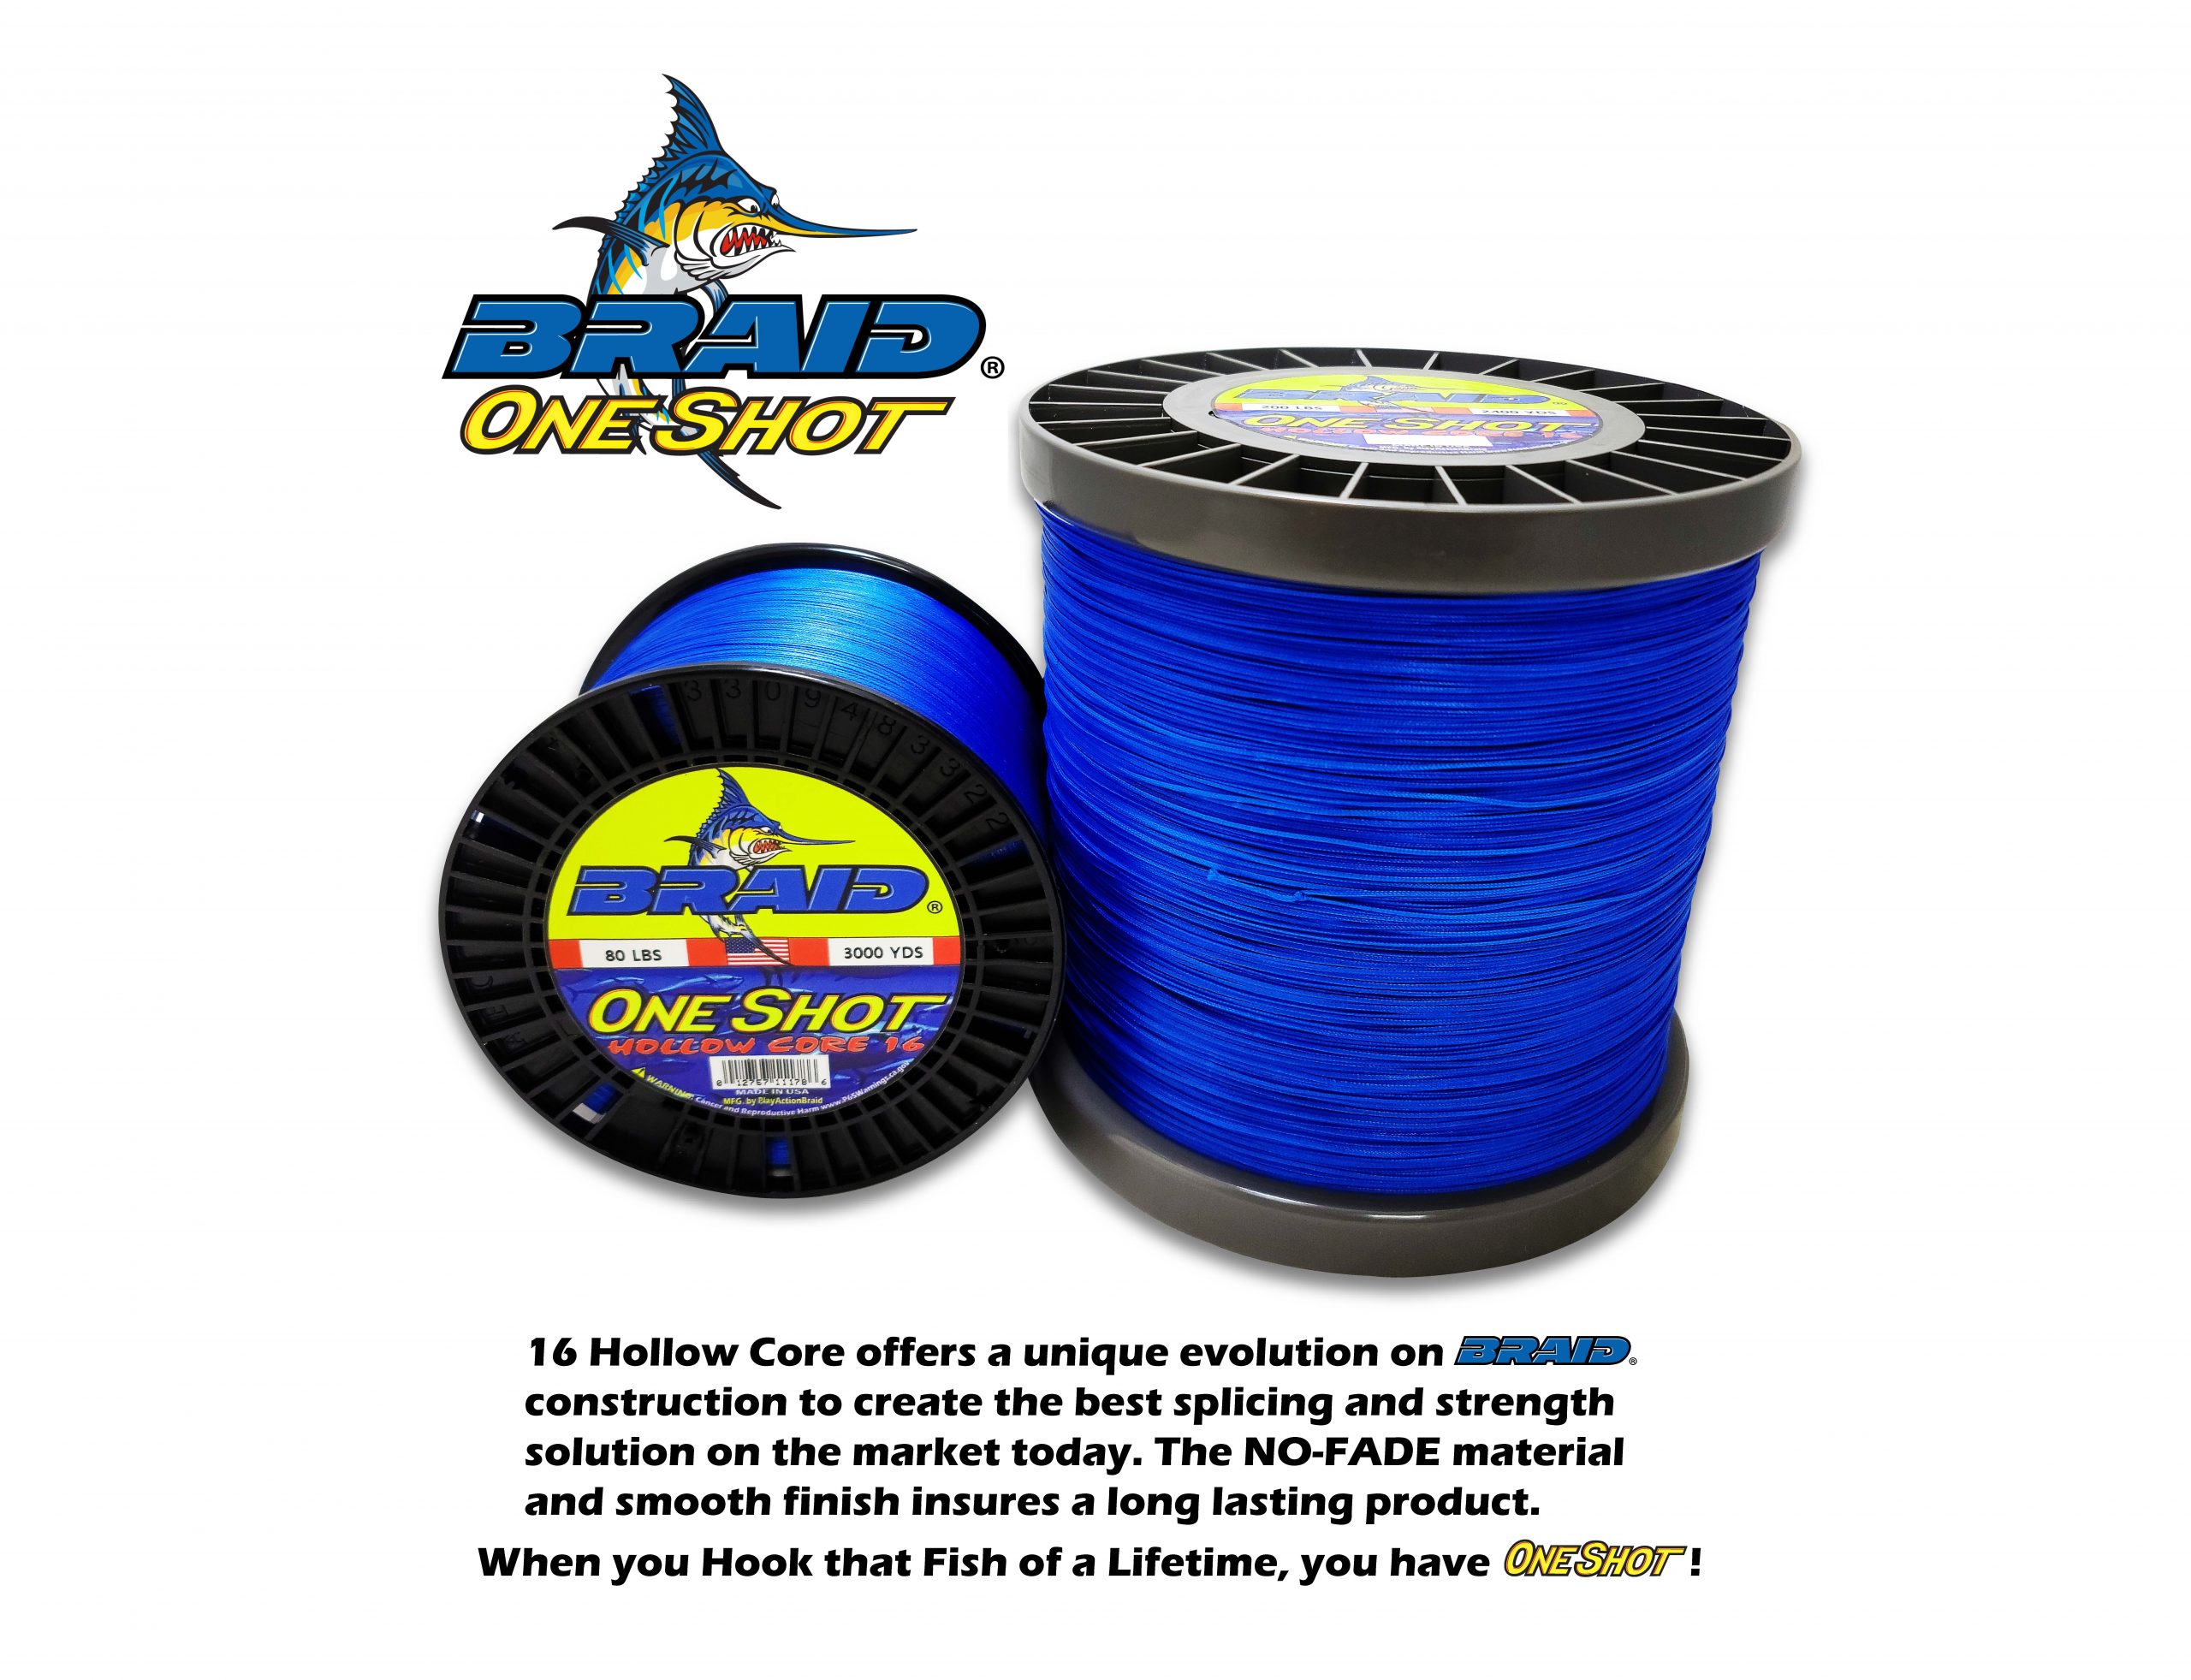 Fins Hollow Core Braid - 80 lb. - 4800 yd. - Blue